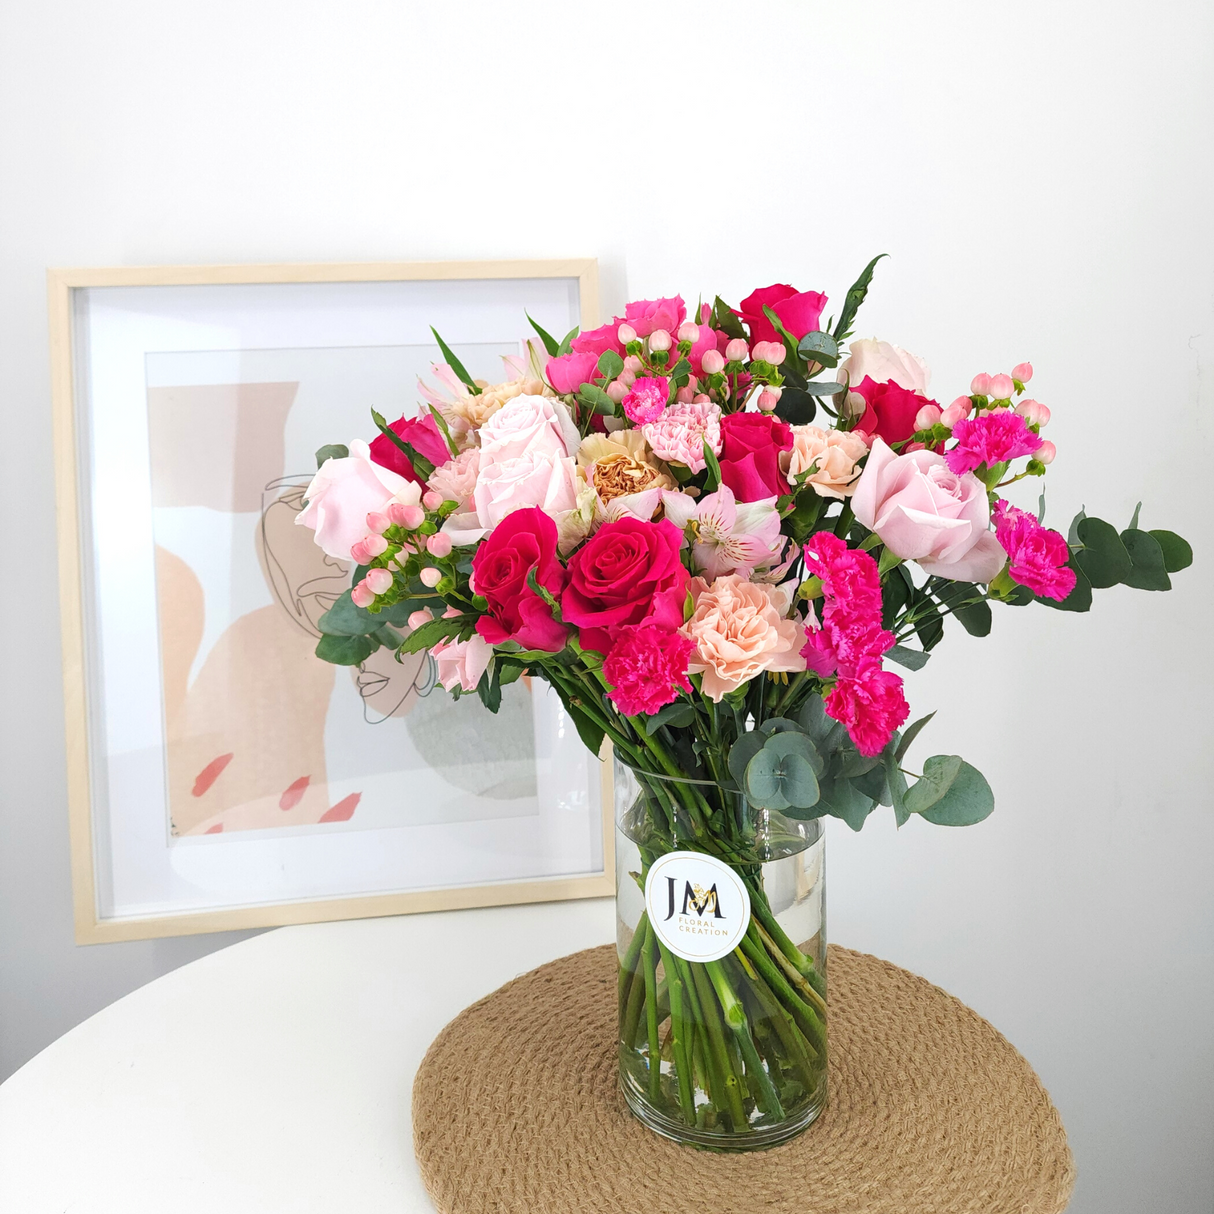 velvet Pink Roses and Carnations Vase Arrangement Birthday Flower Bouquet Singapore